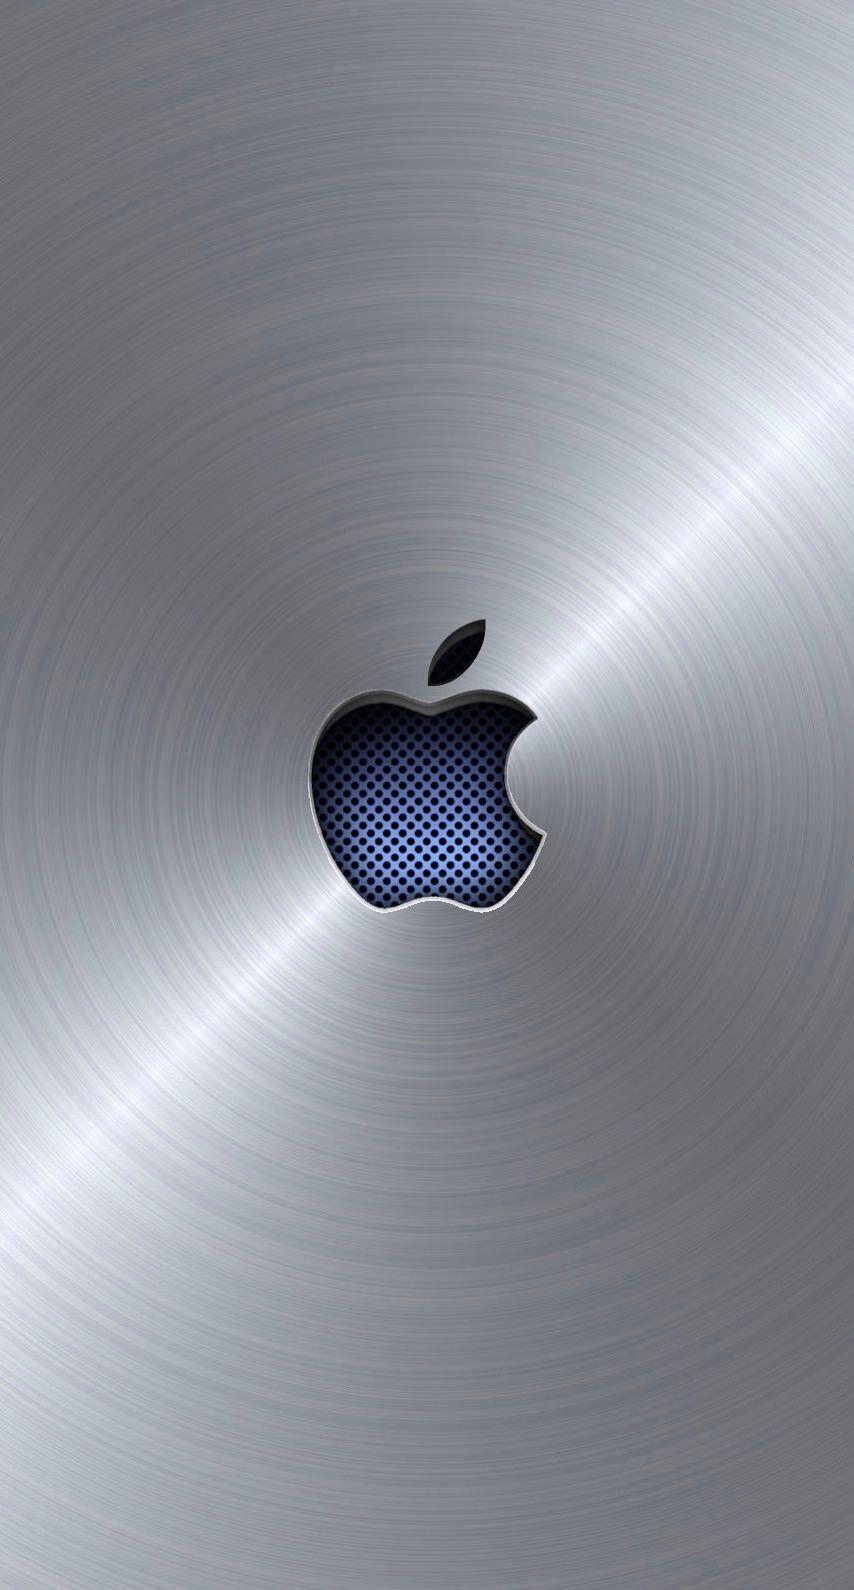 Silver Apple Logo - Apple logo cool blue silver | wallpaper.sc iPhone6s | Apple Fever ...